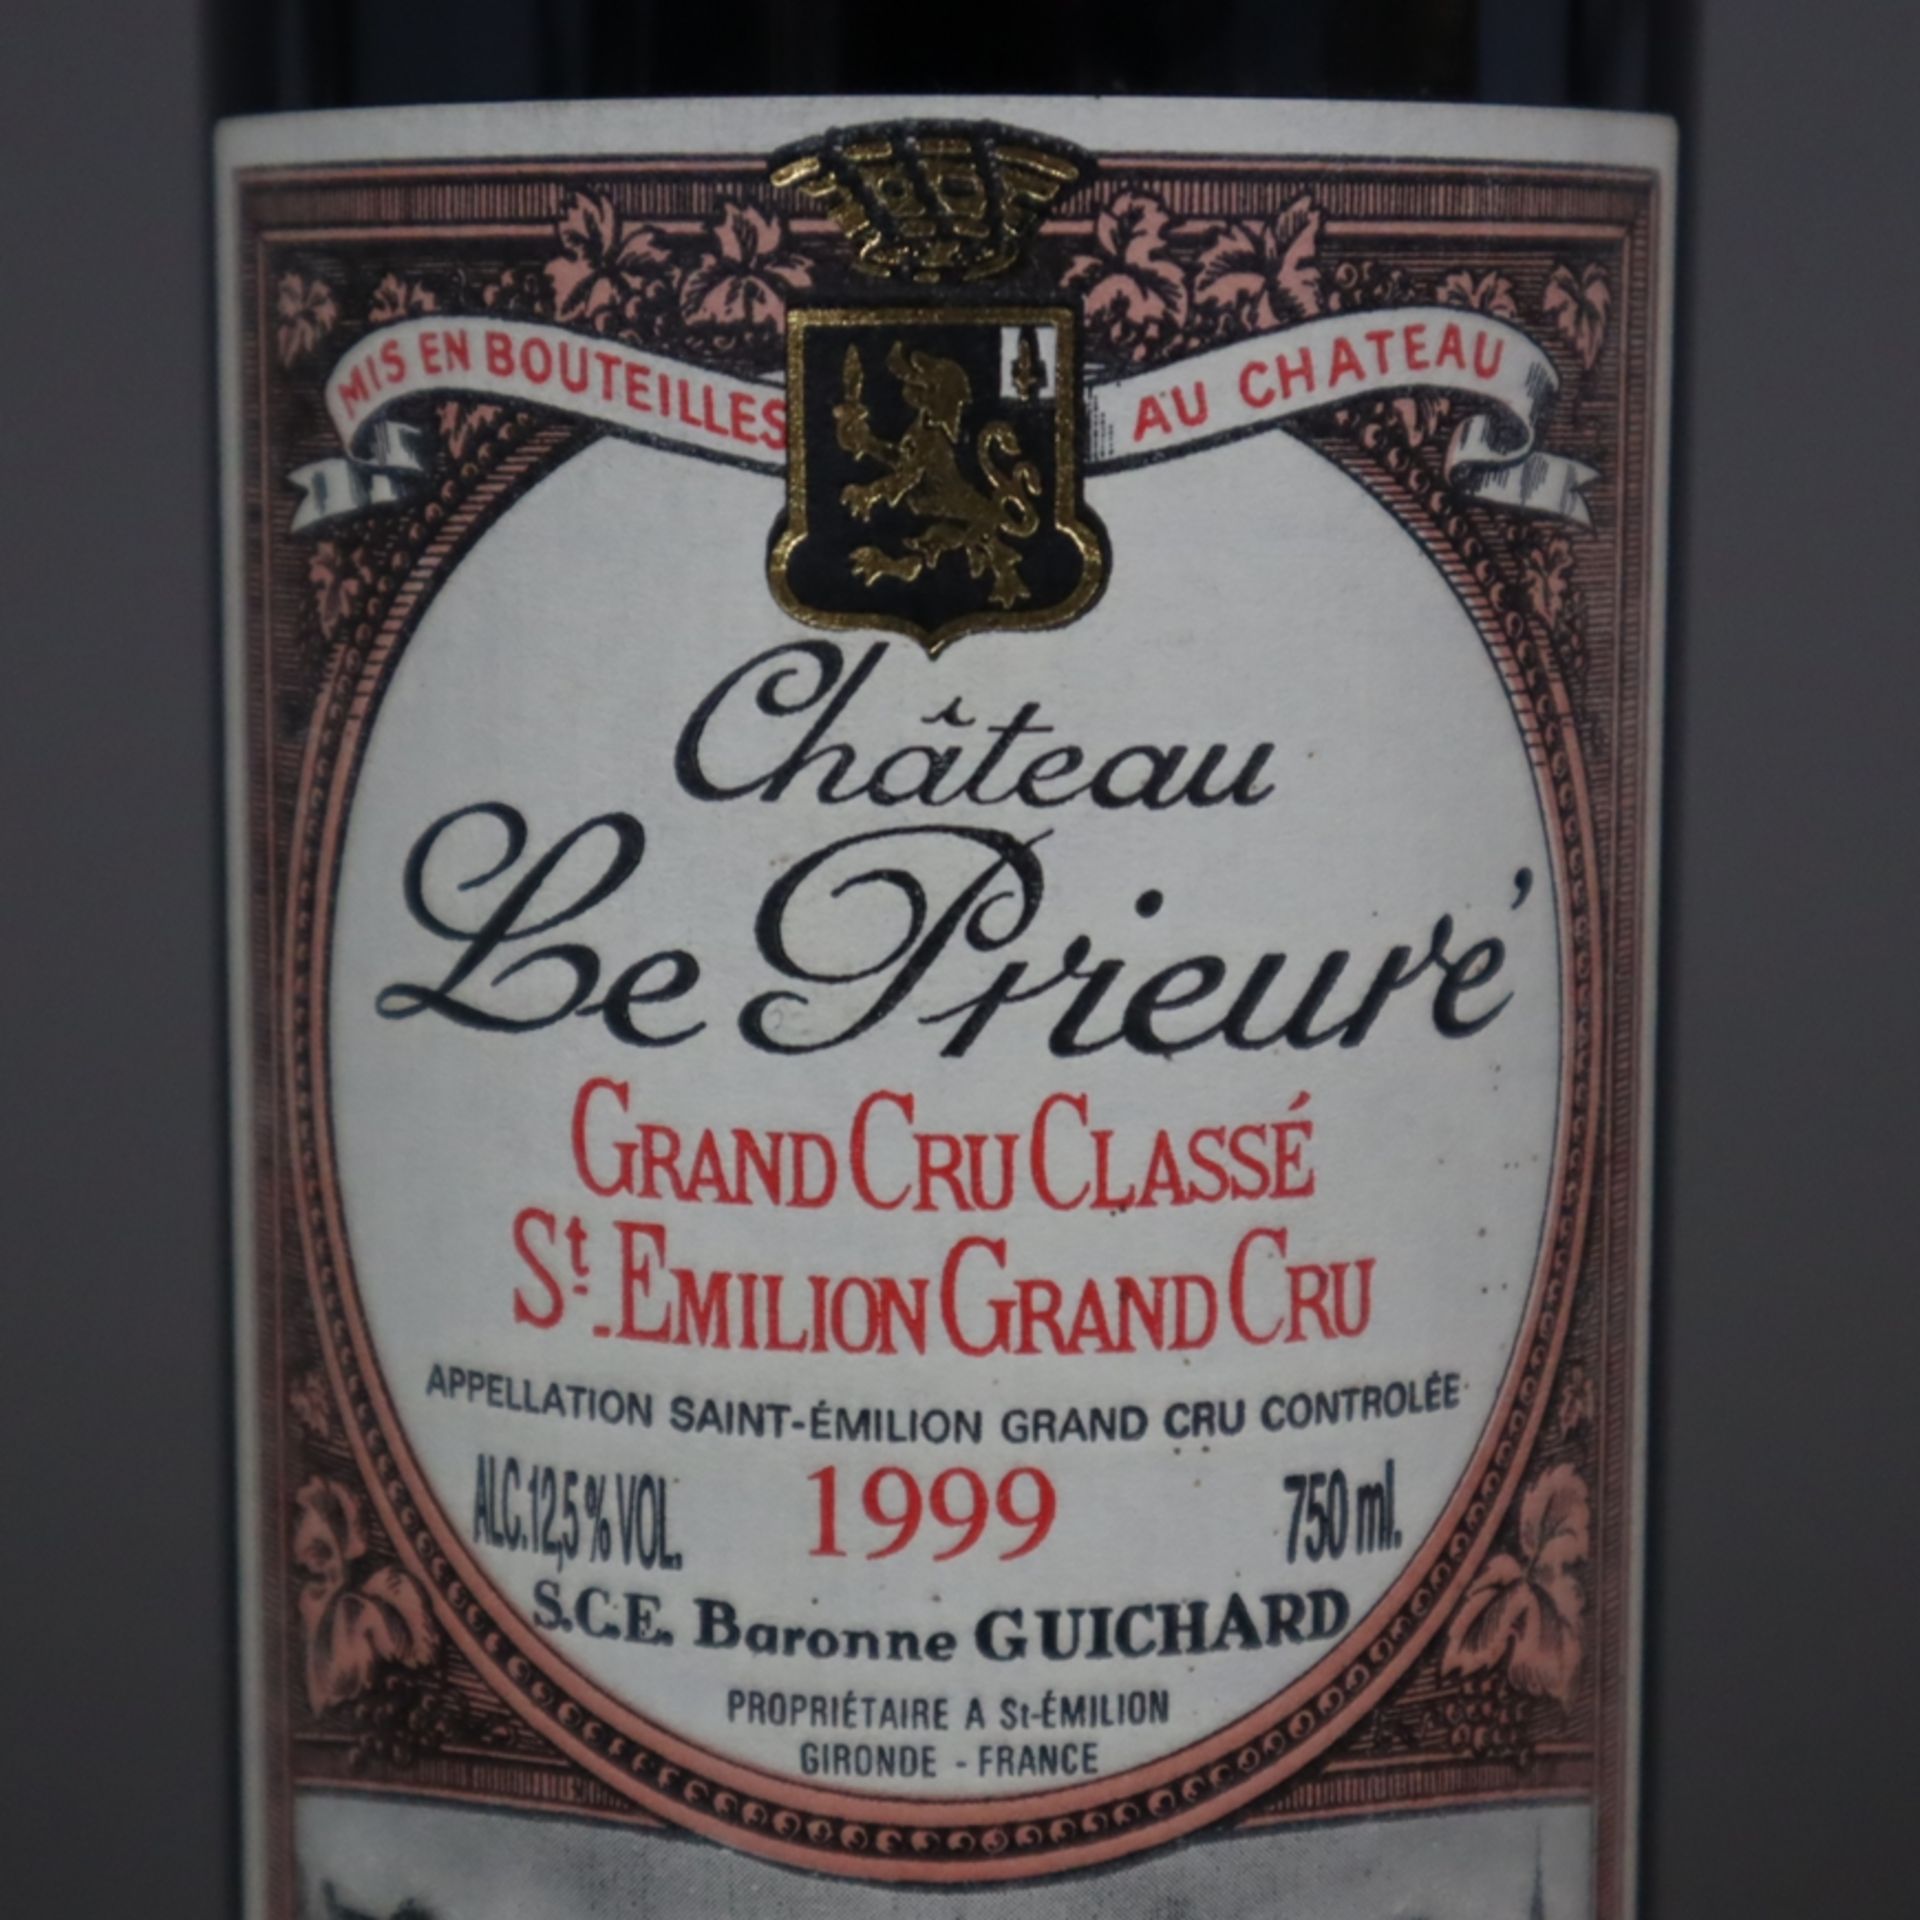 Wein - Chateau Le Prieuré, Grand Cru Classé, St. Emilion Grand Cru, Jahrgang 1999, 0,7 Liter - Bild 3 aus 3